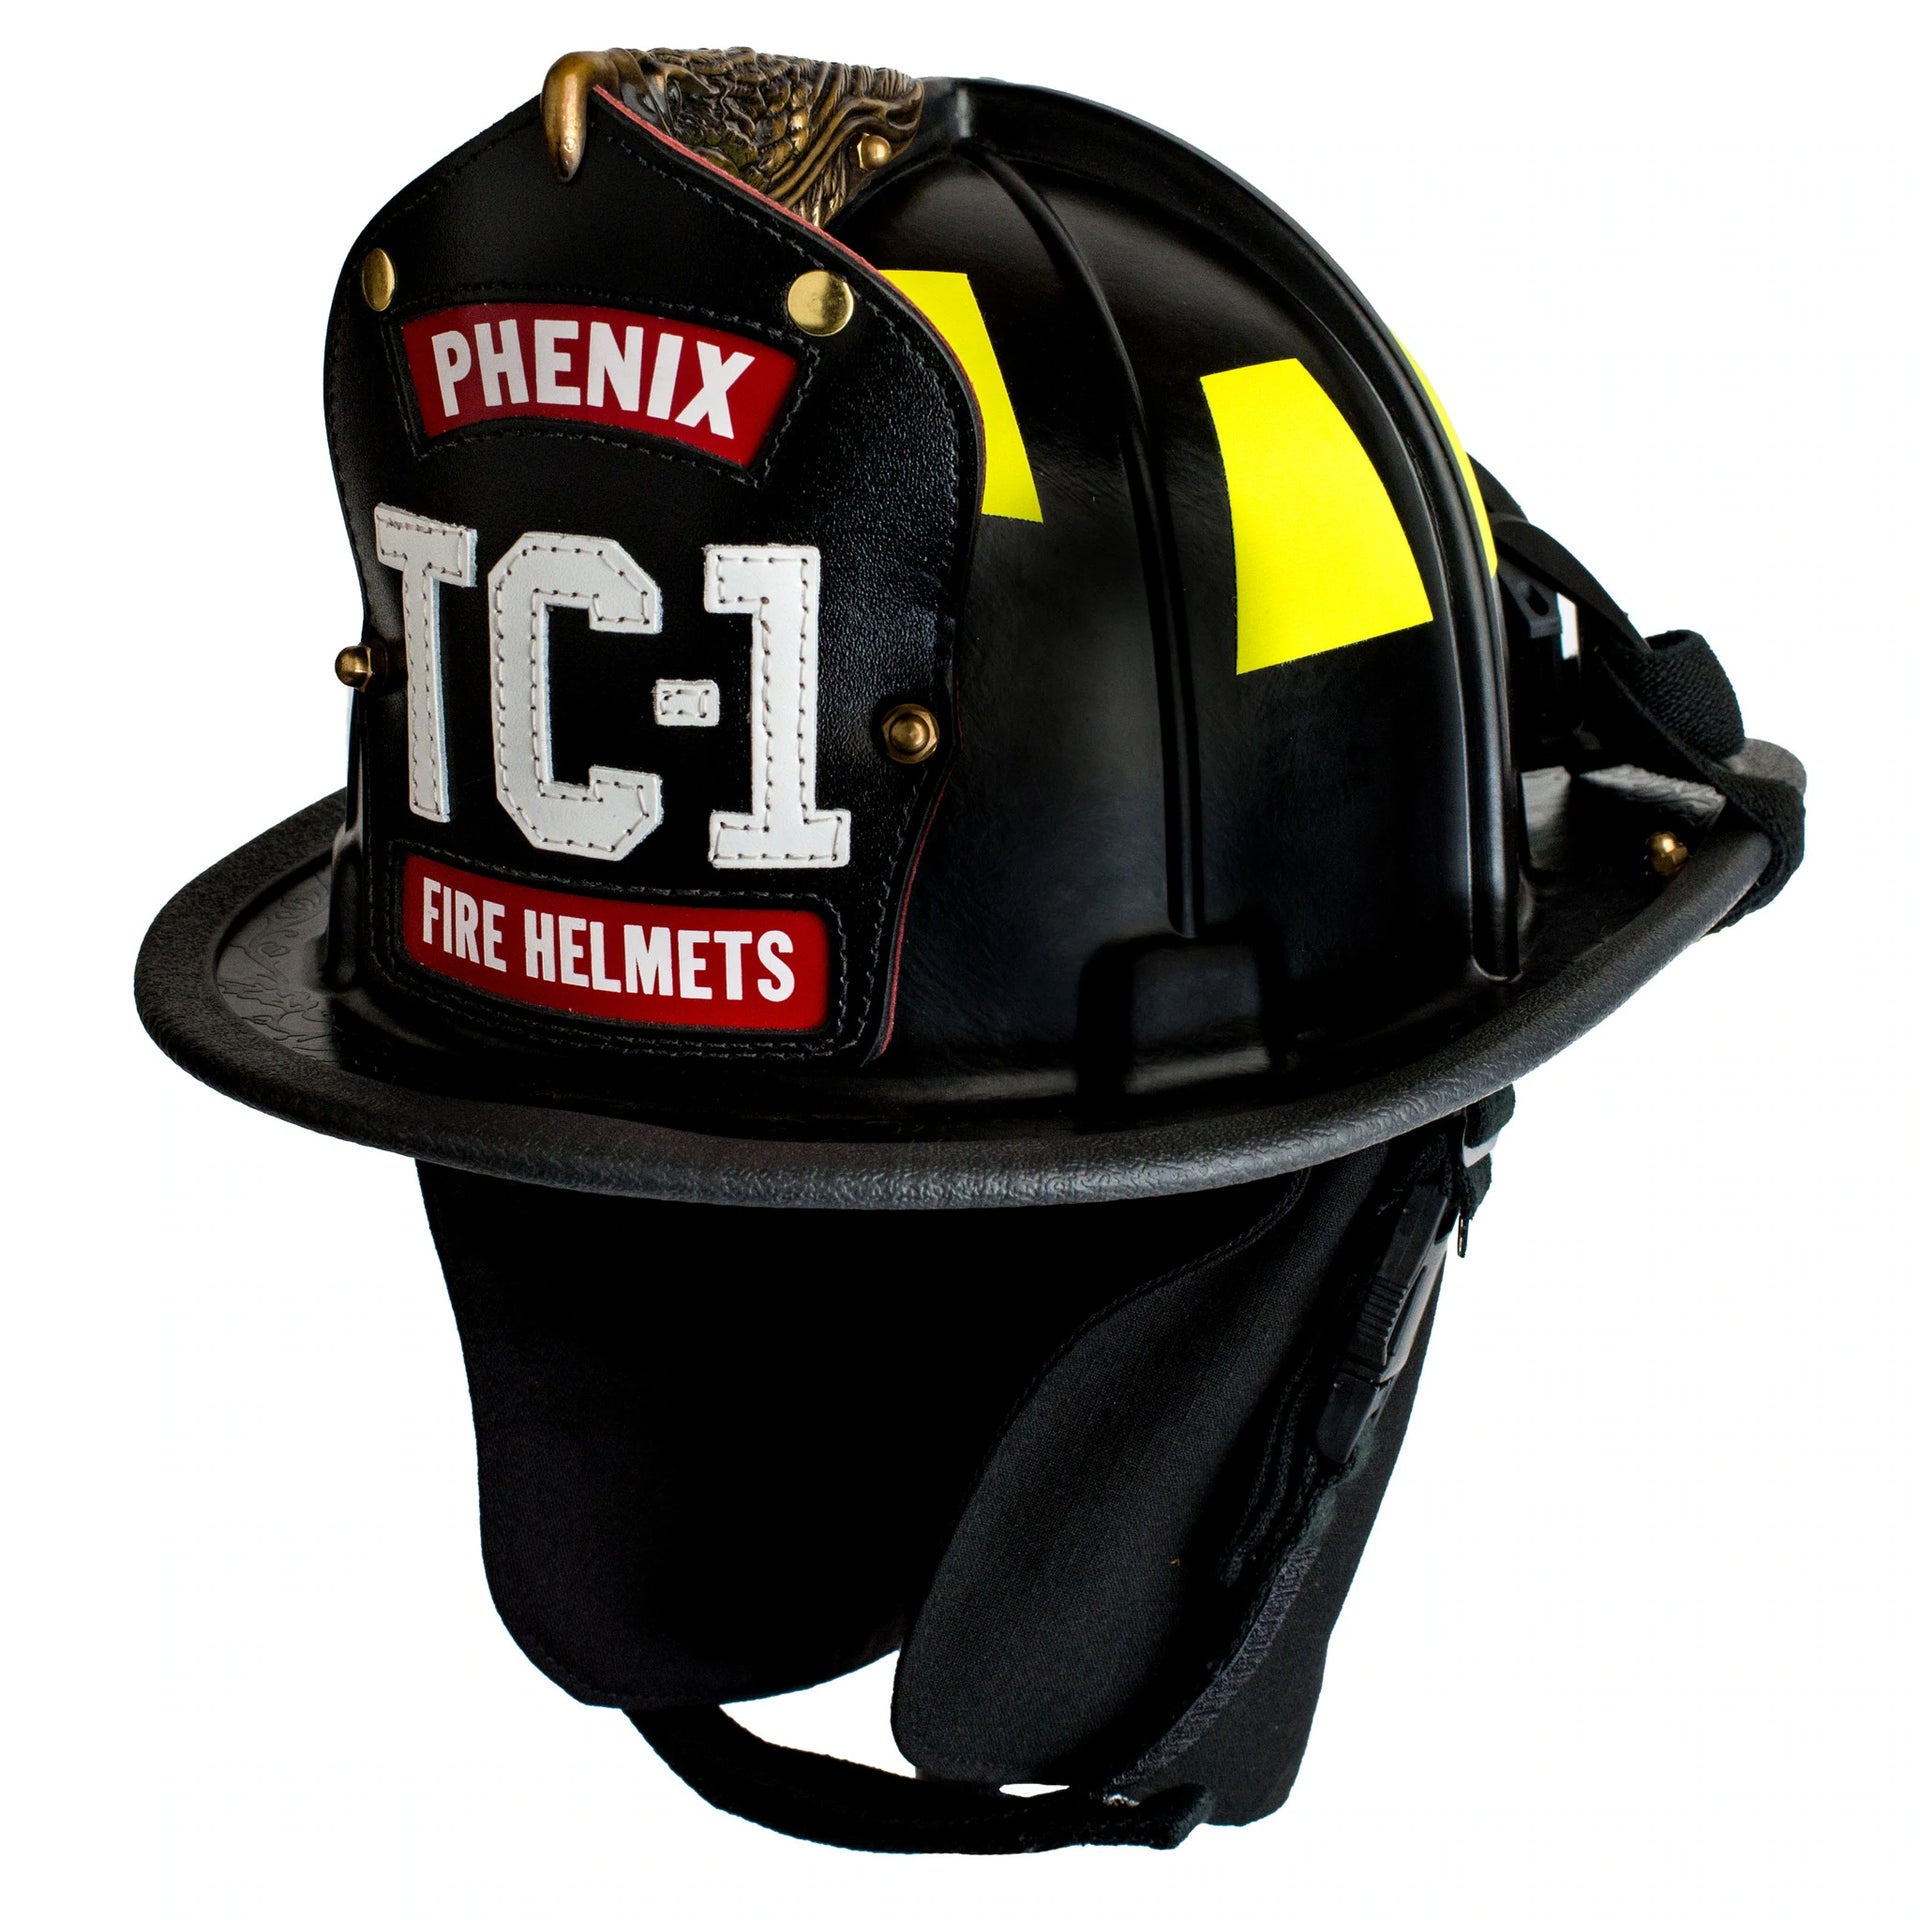 Phenix Technology Tc1 Traditional Composite Firefighter Helmet